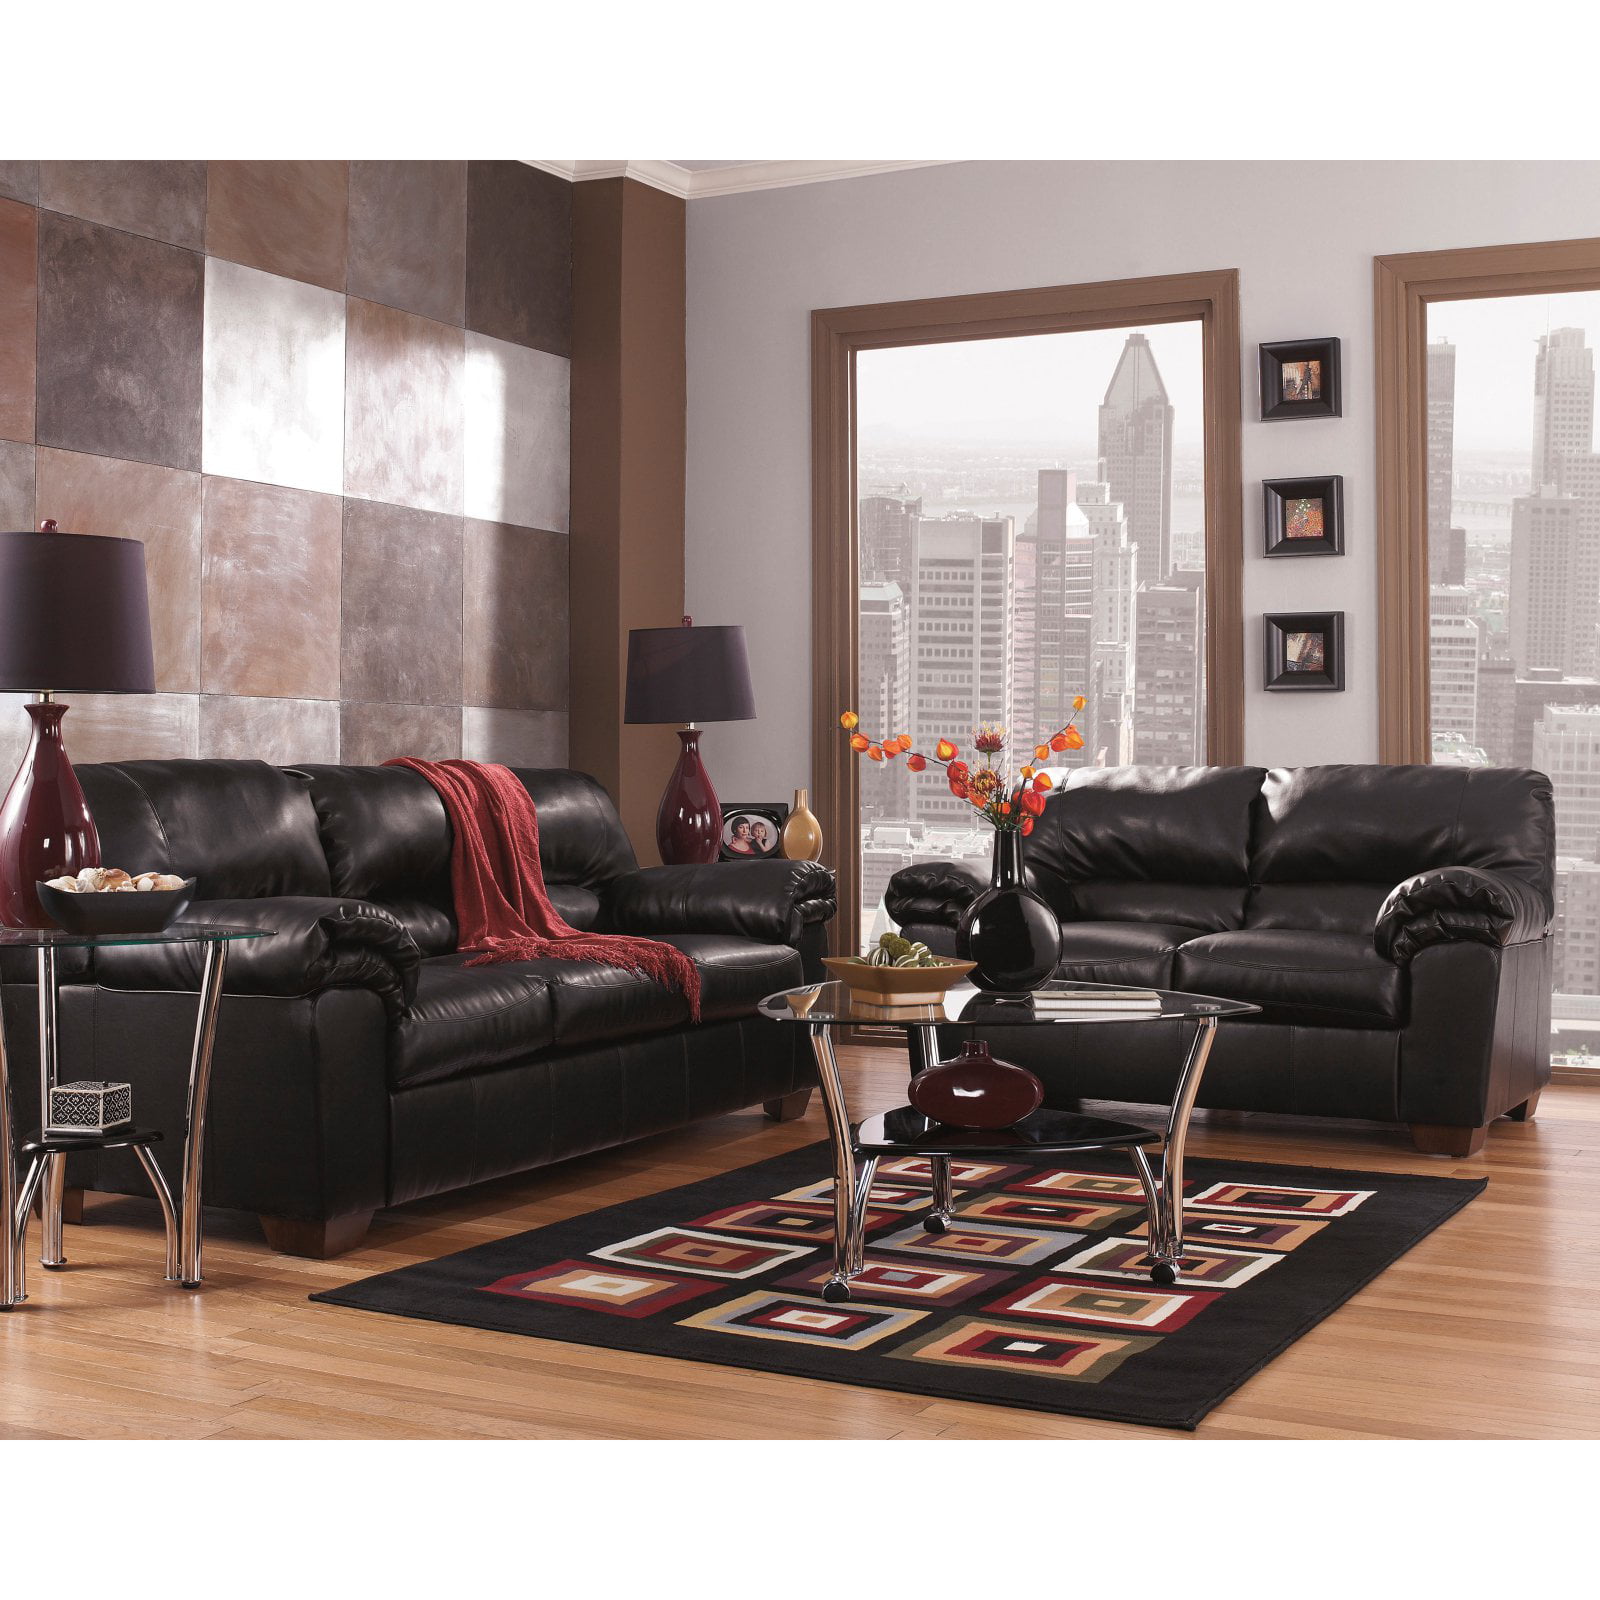 Signature Design by Ashley Commando Leather Living Room Set - Walmart.com